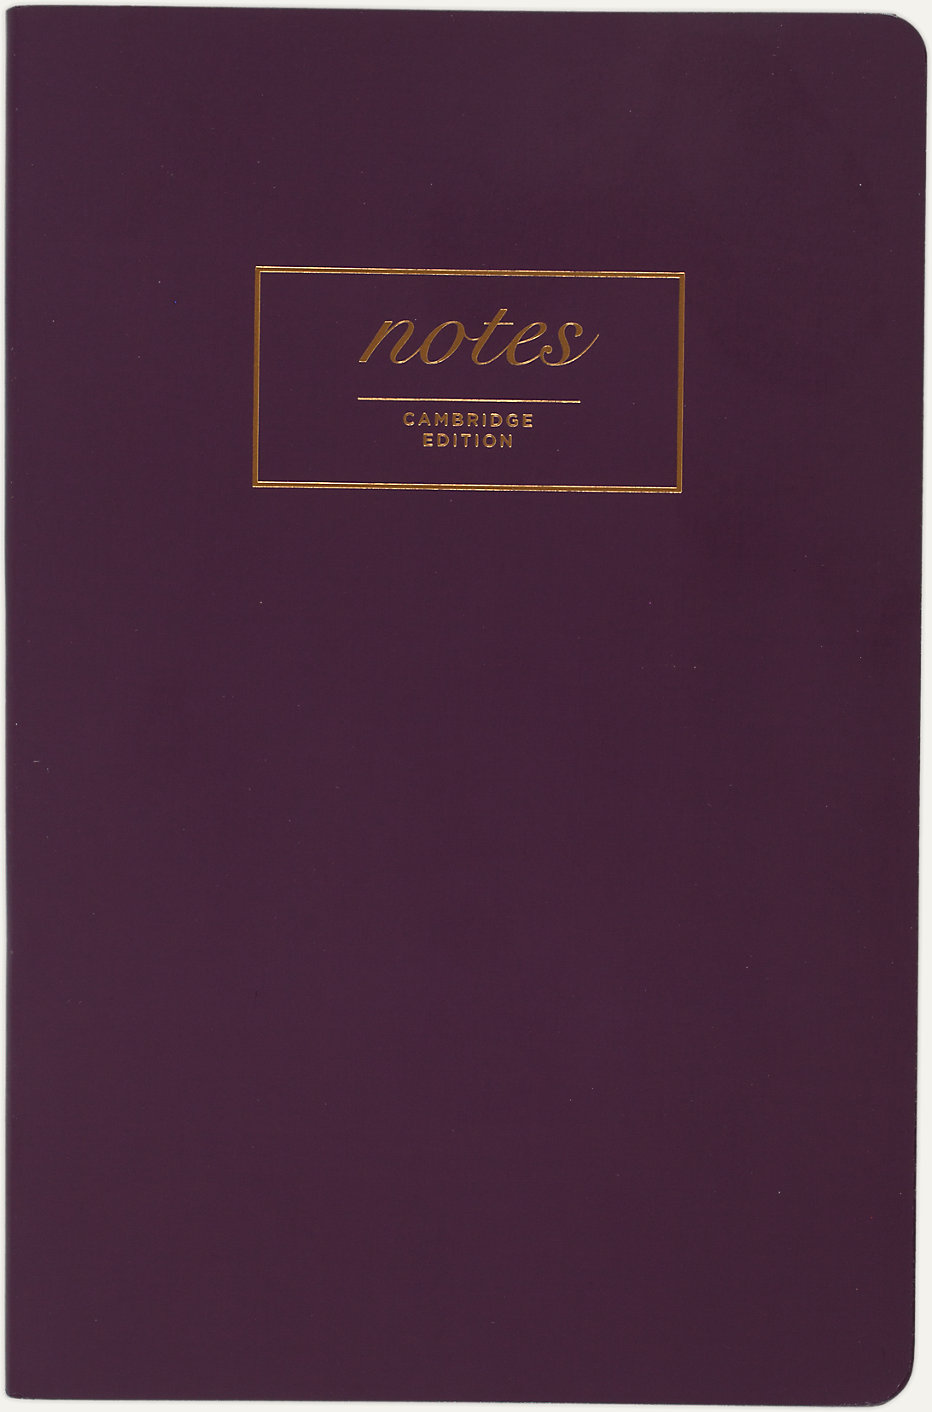 Work Style Fashion Casebound 59287 5-1/2 x 8-1/2 80 Sheets Aqua Cambridge Notebook 